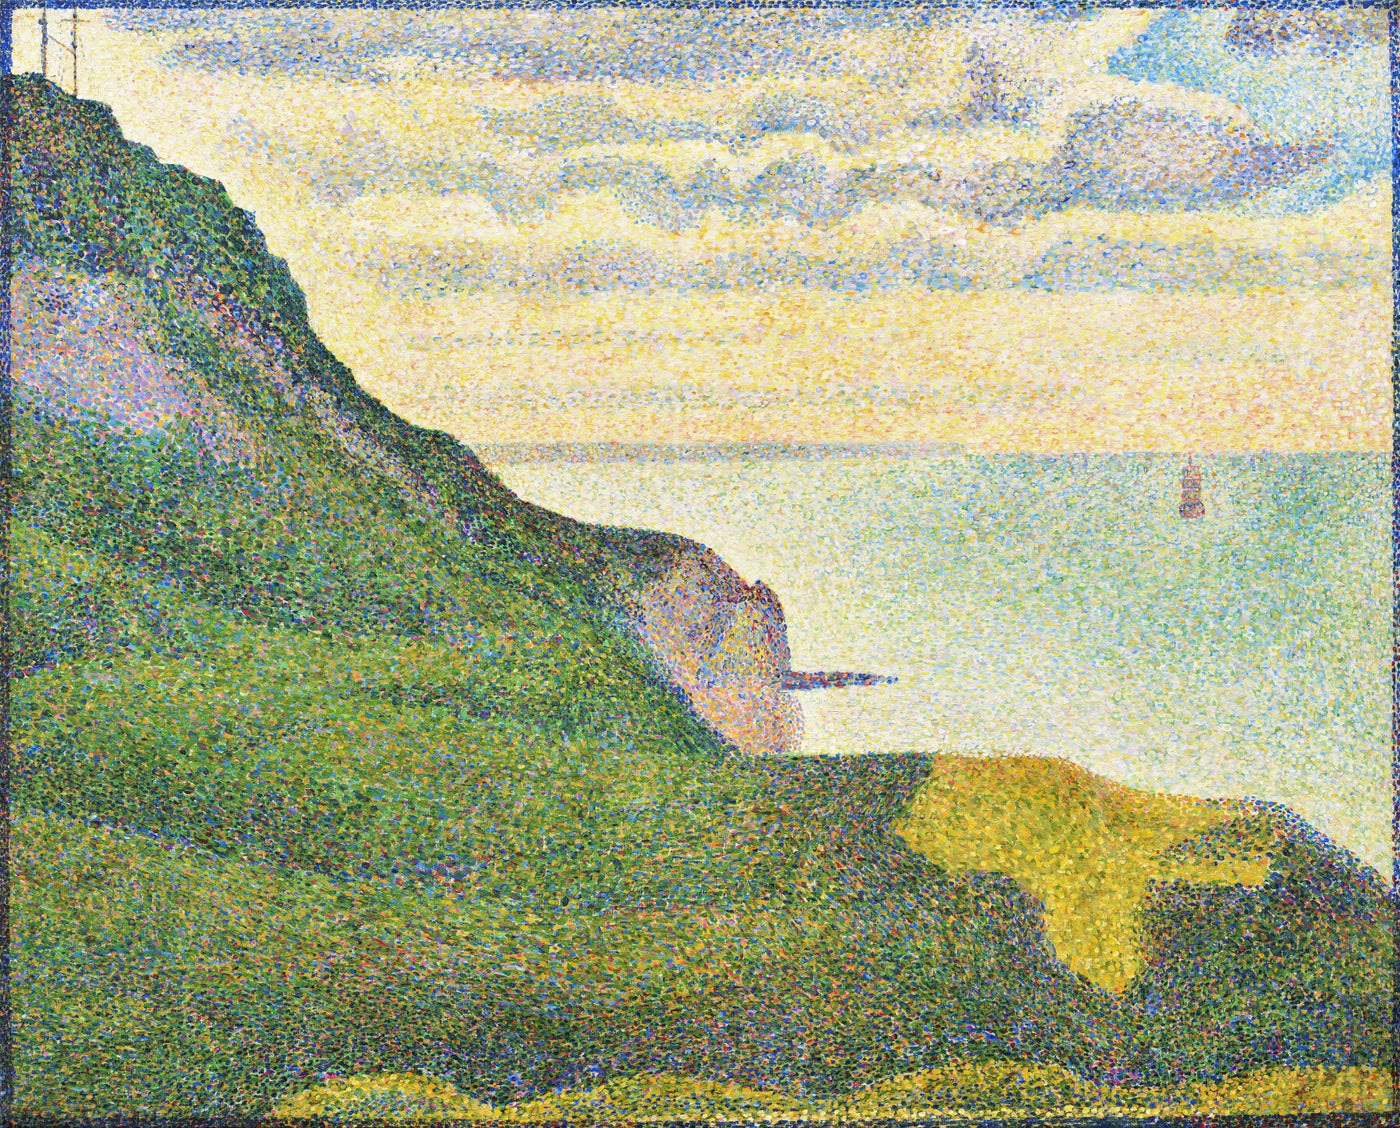 Seestück in Port-en-Bessin, Normandie (1888) von Georges Seurat.